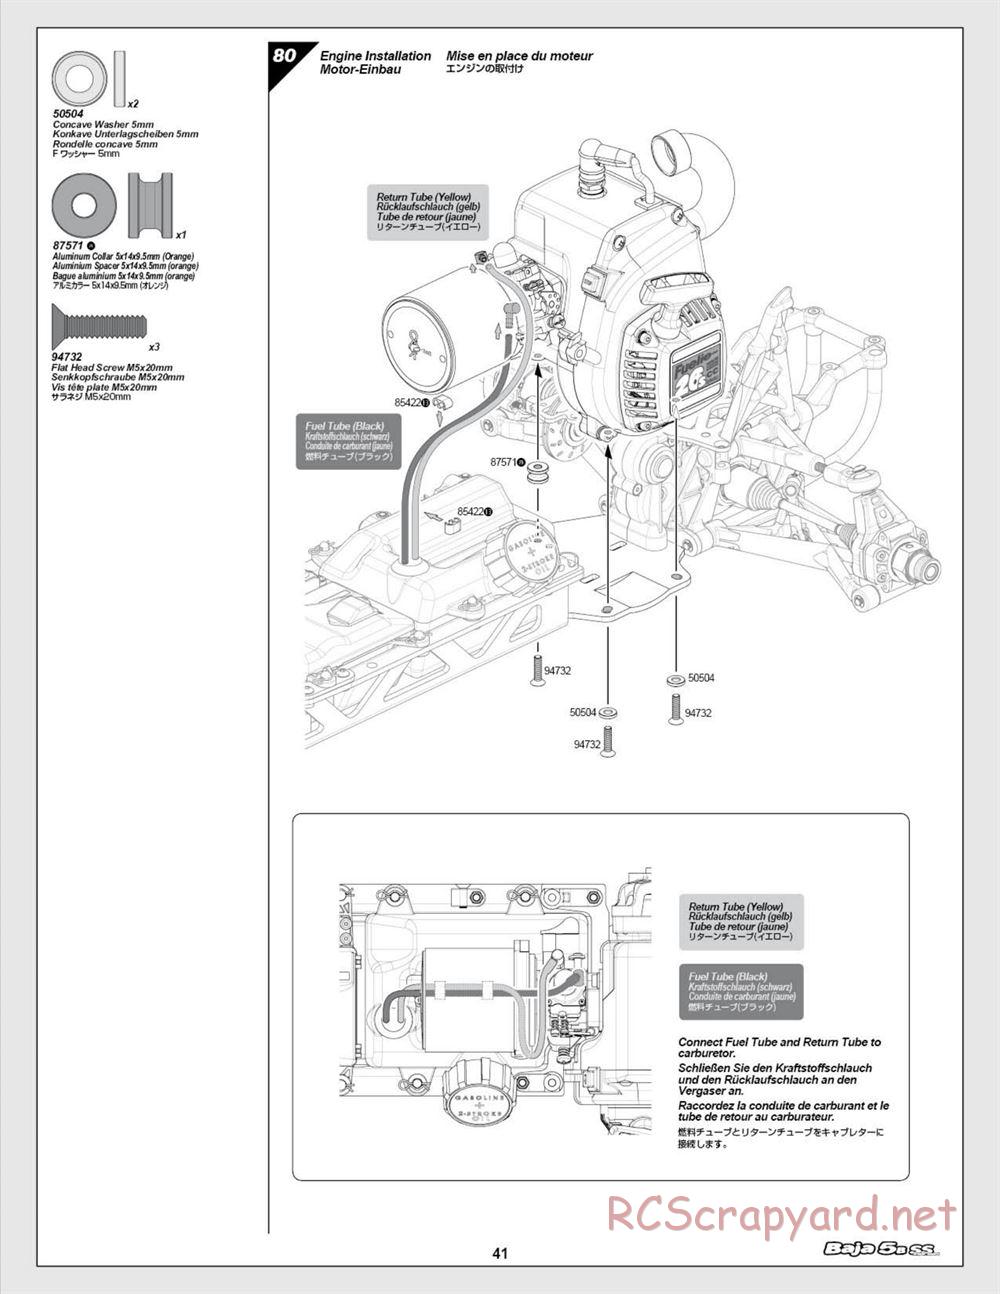 HPI - Baja 5b SS - Manual - Page 41